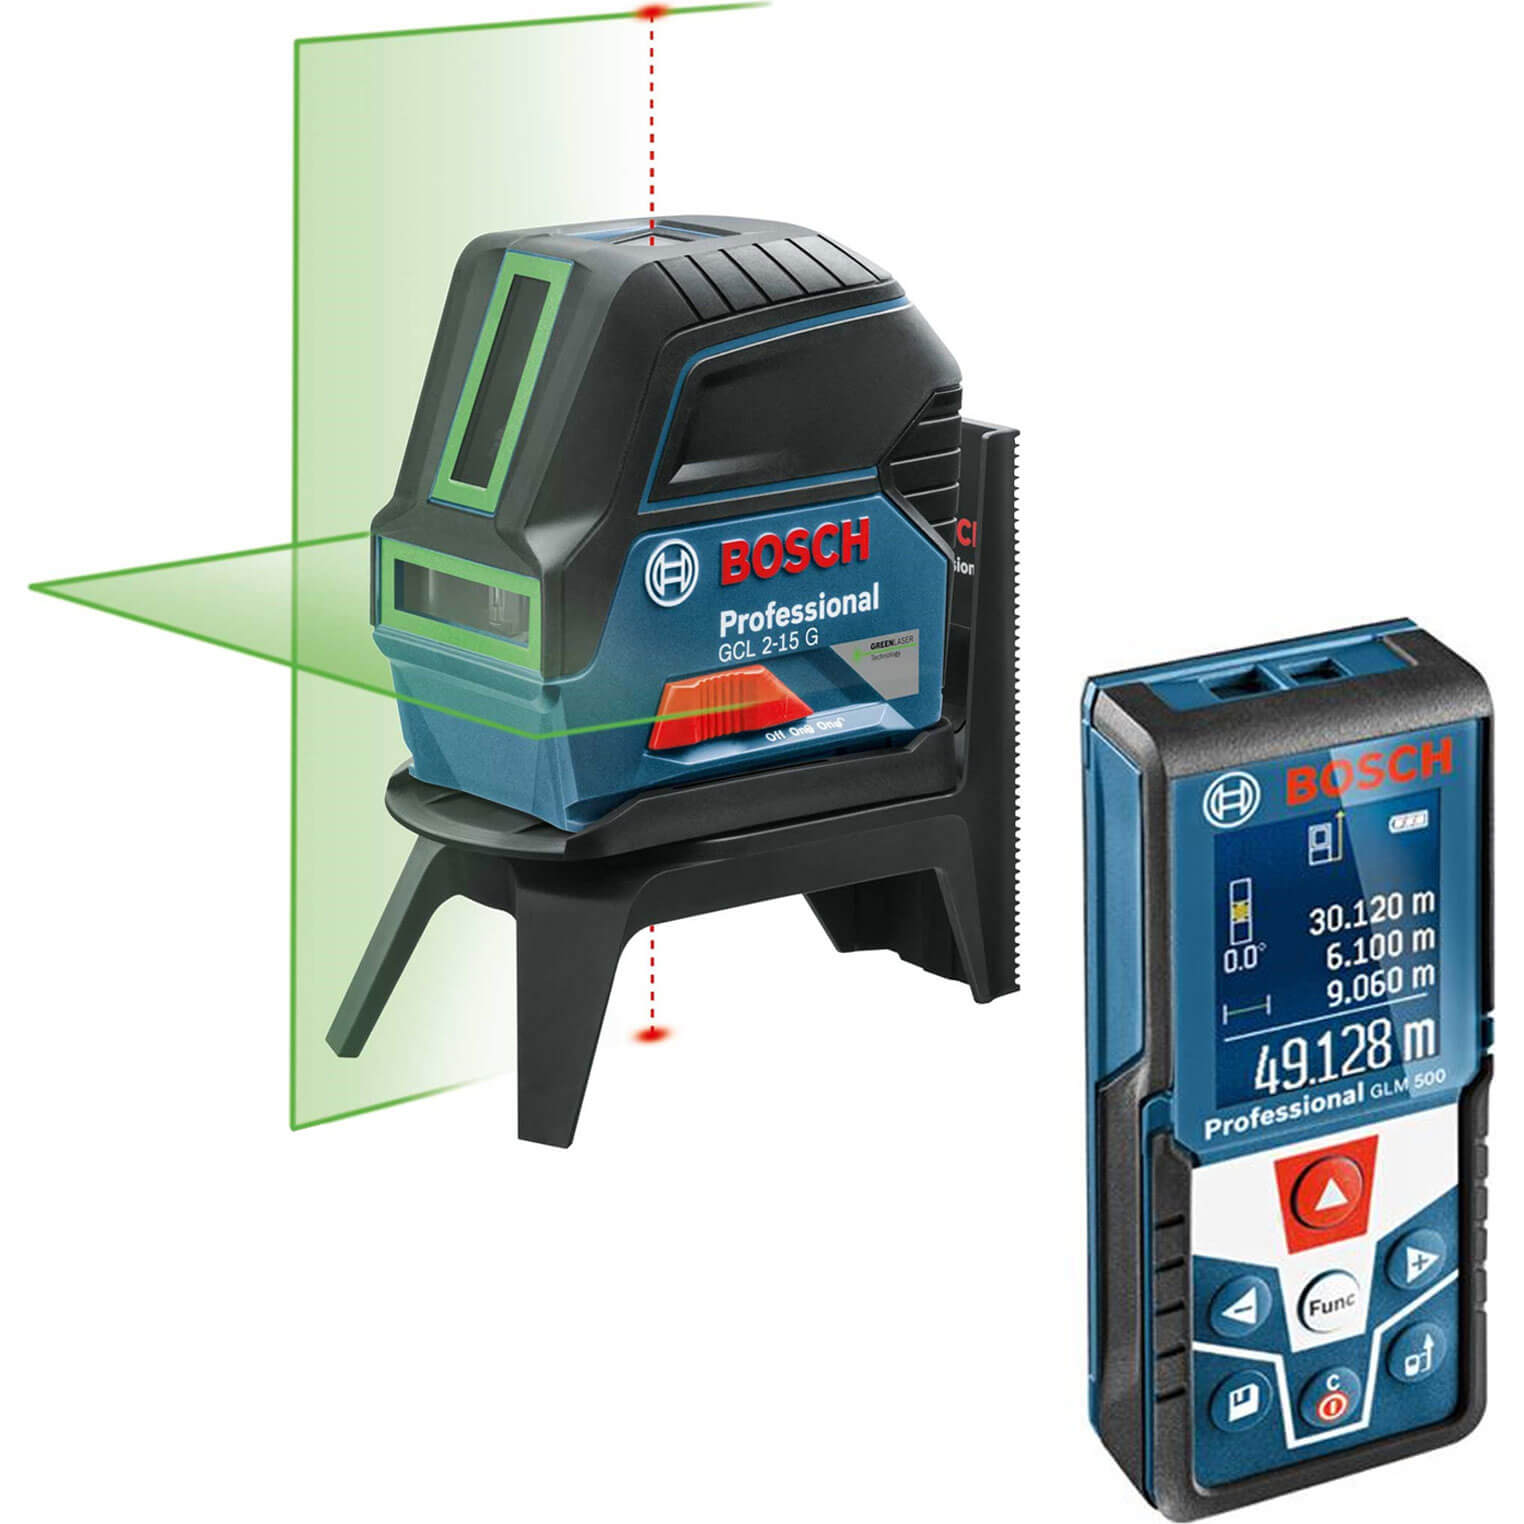 Photo of Bosch Gcl 2-15 Green Self Levelling Laser Level & Glm500 Laser Measure Kit